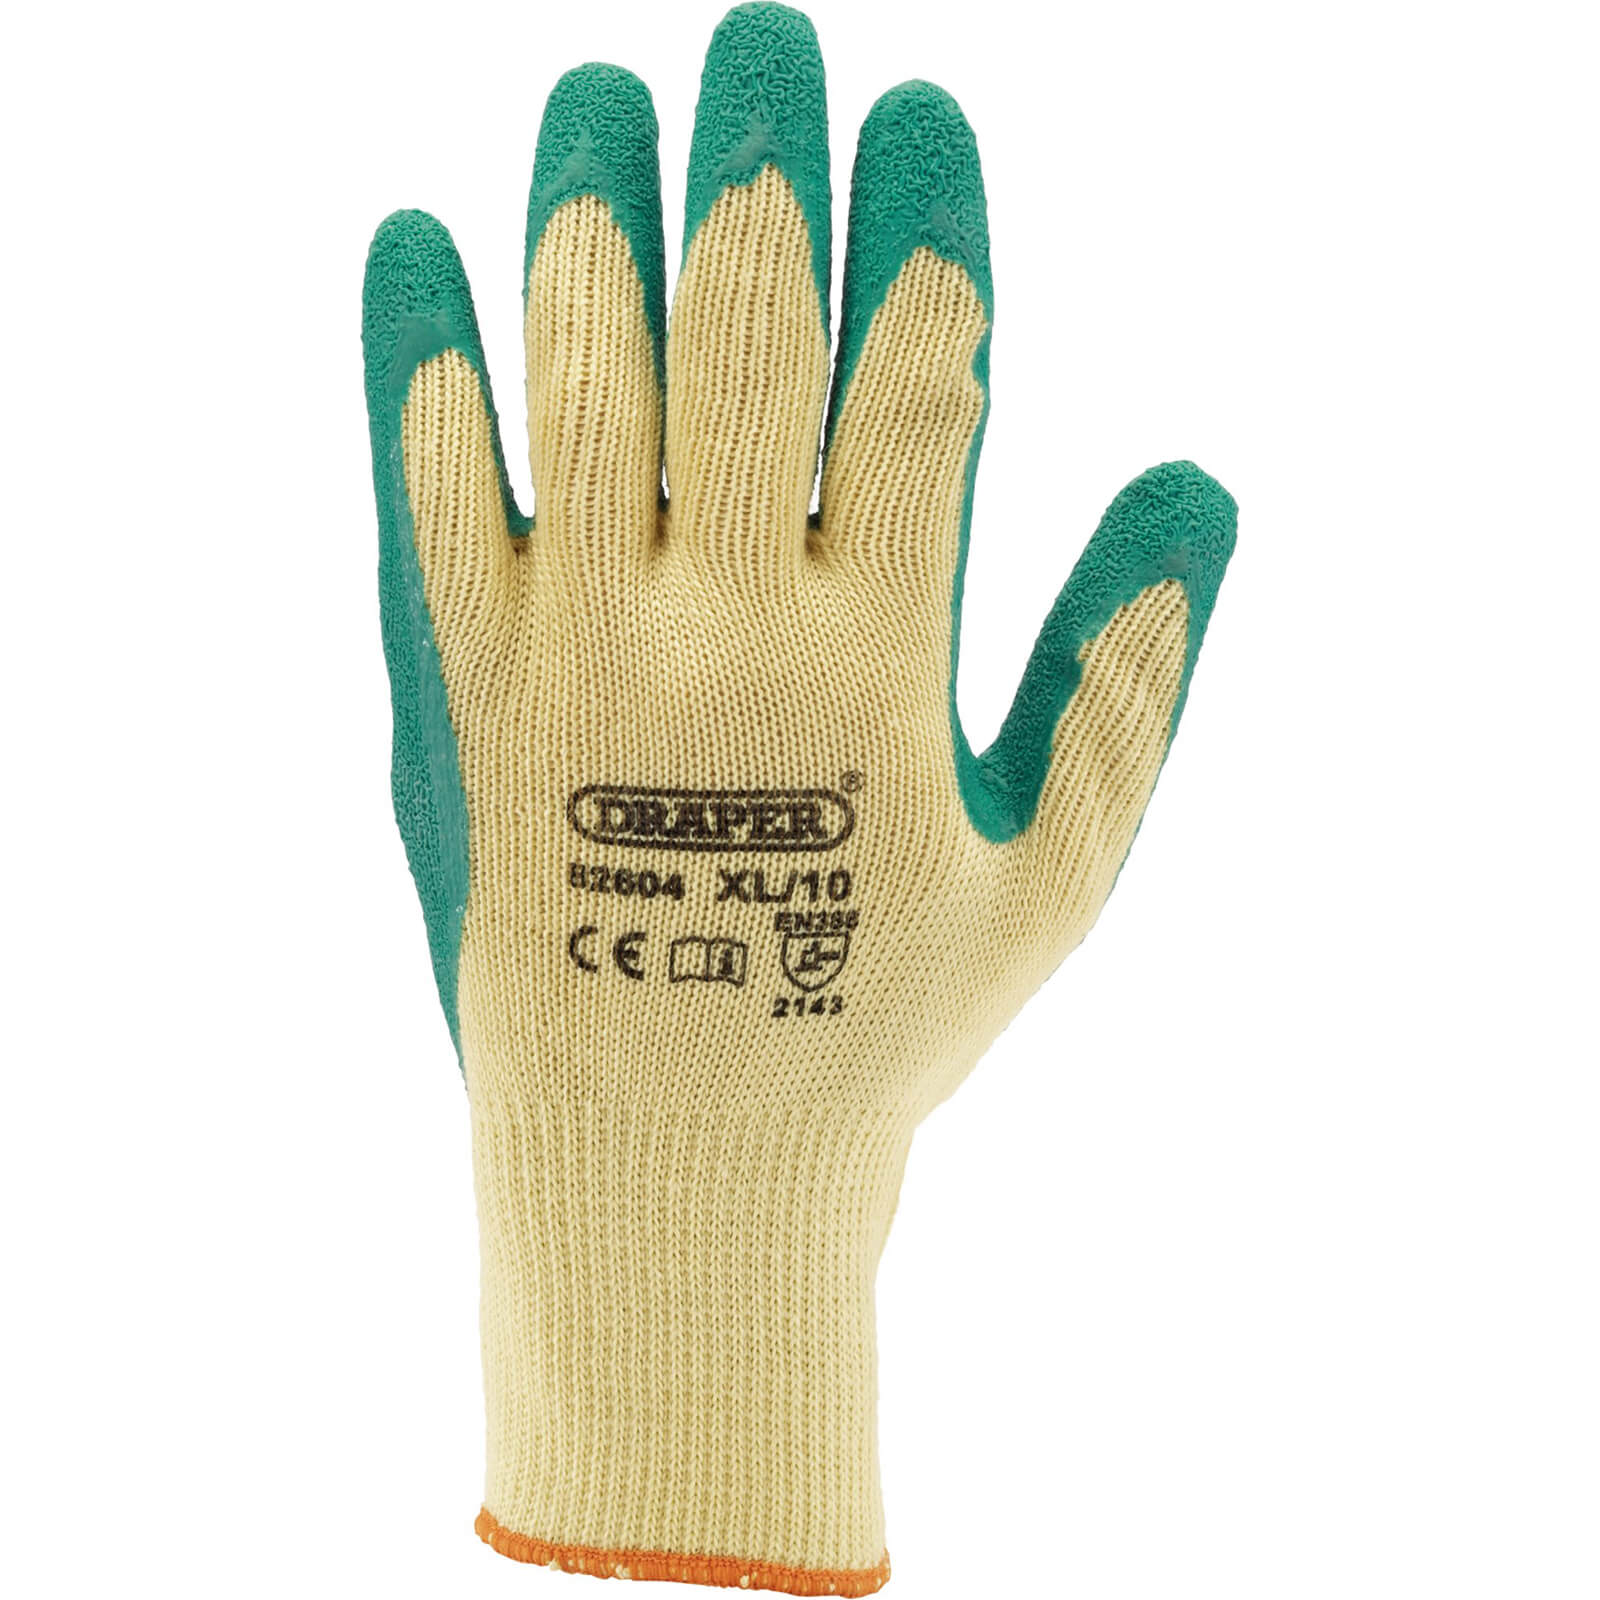 Image of Draper Heavy Duty Latex Coated Work Gloves Green L